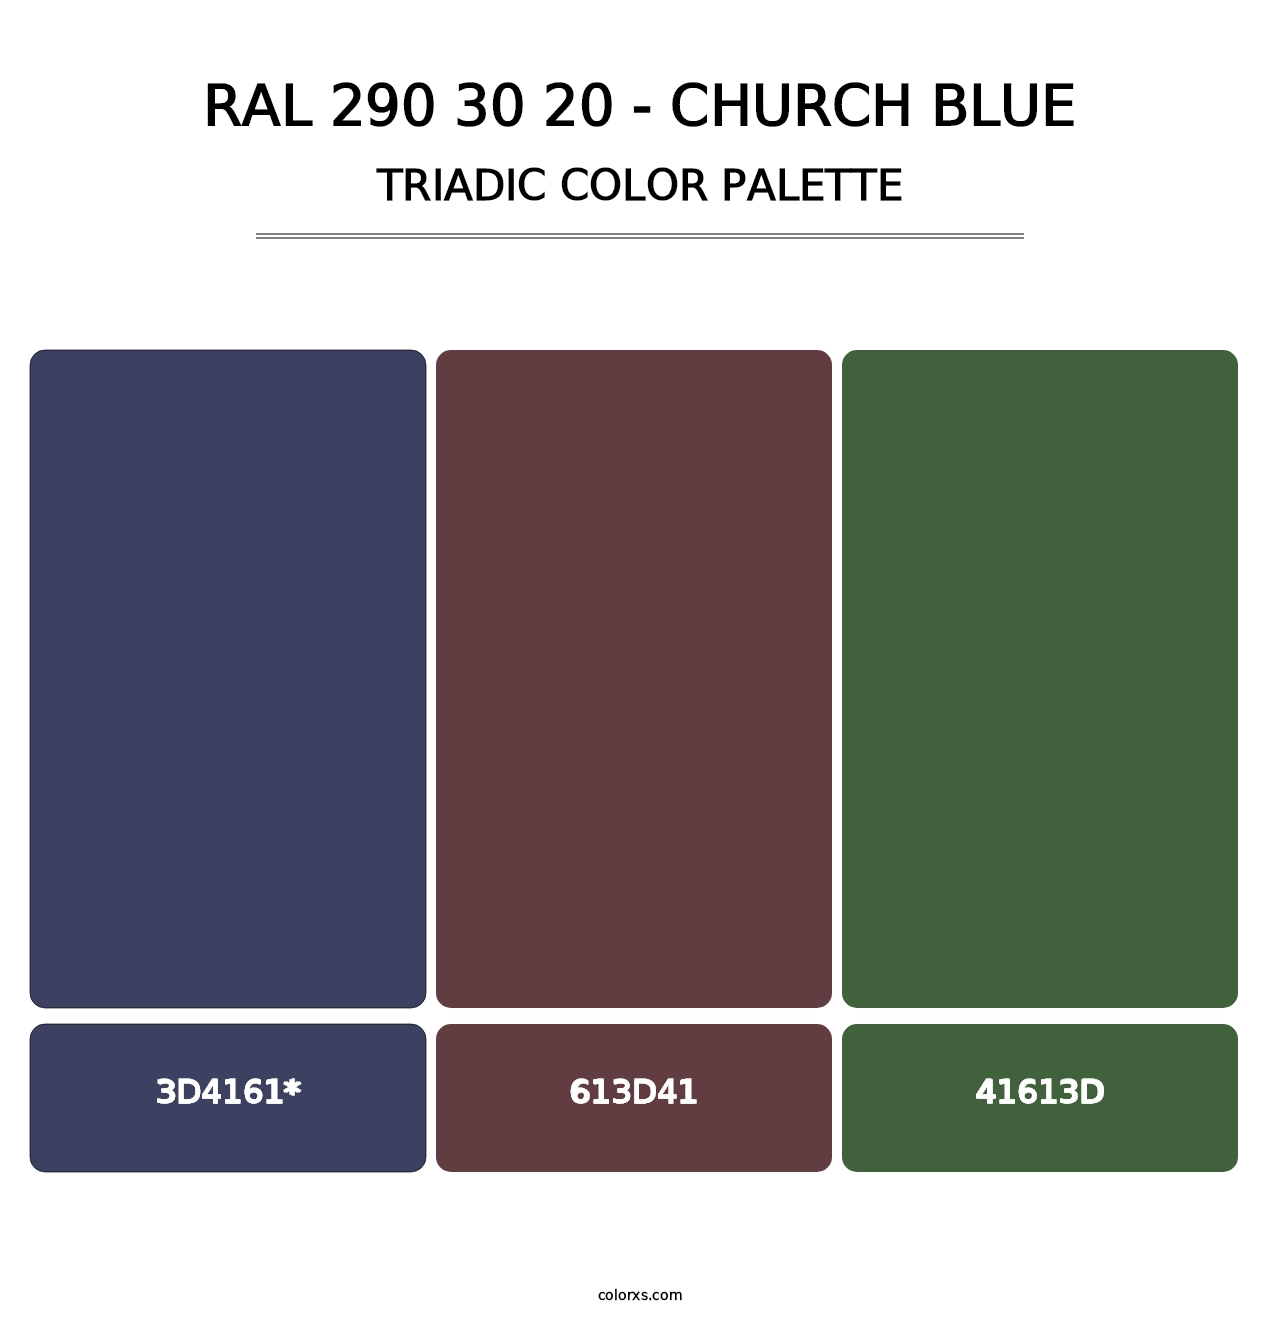 RAL 290 30 20 - Church Blue - Triadic Color Palette